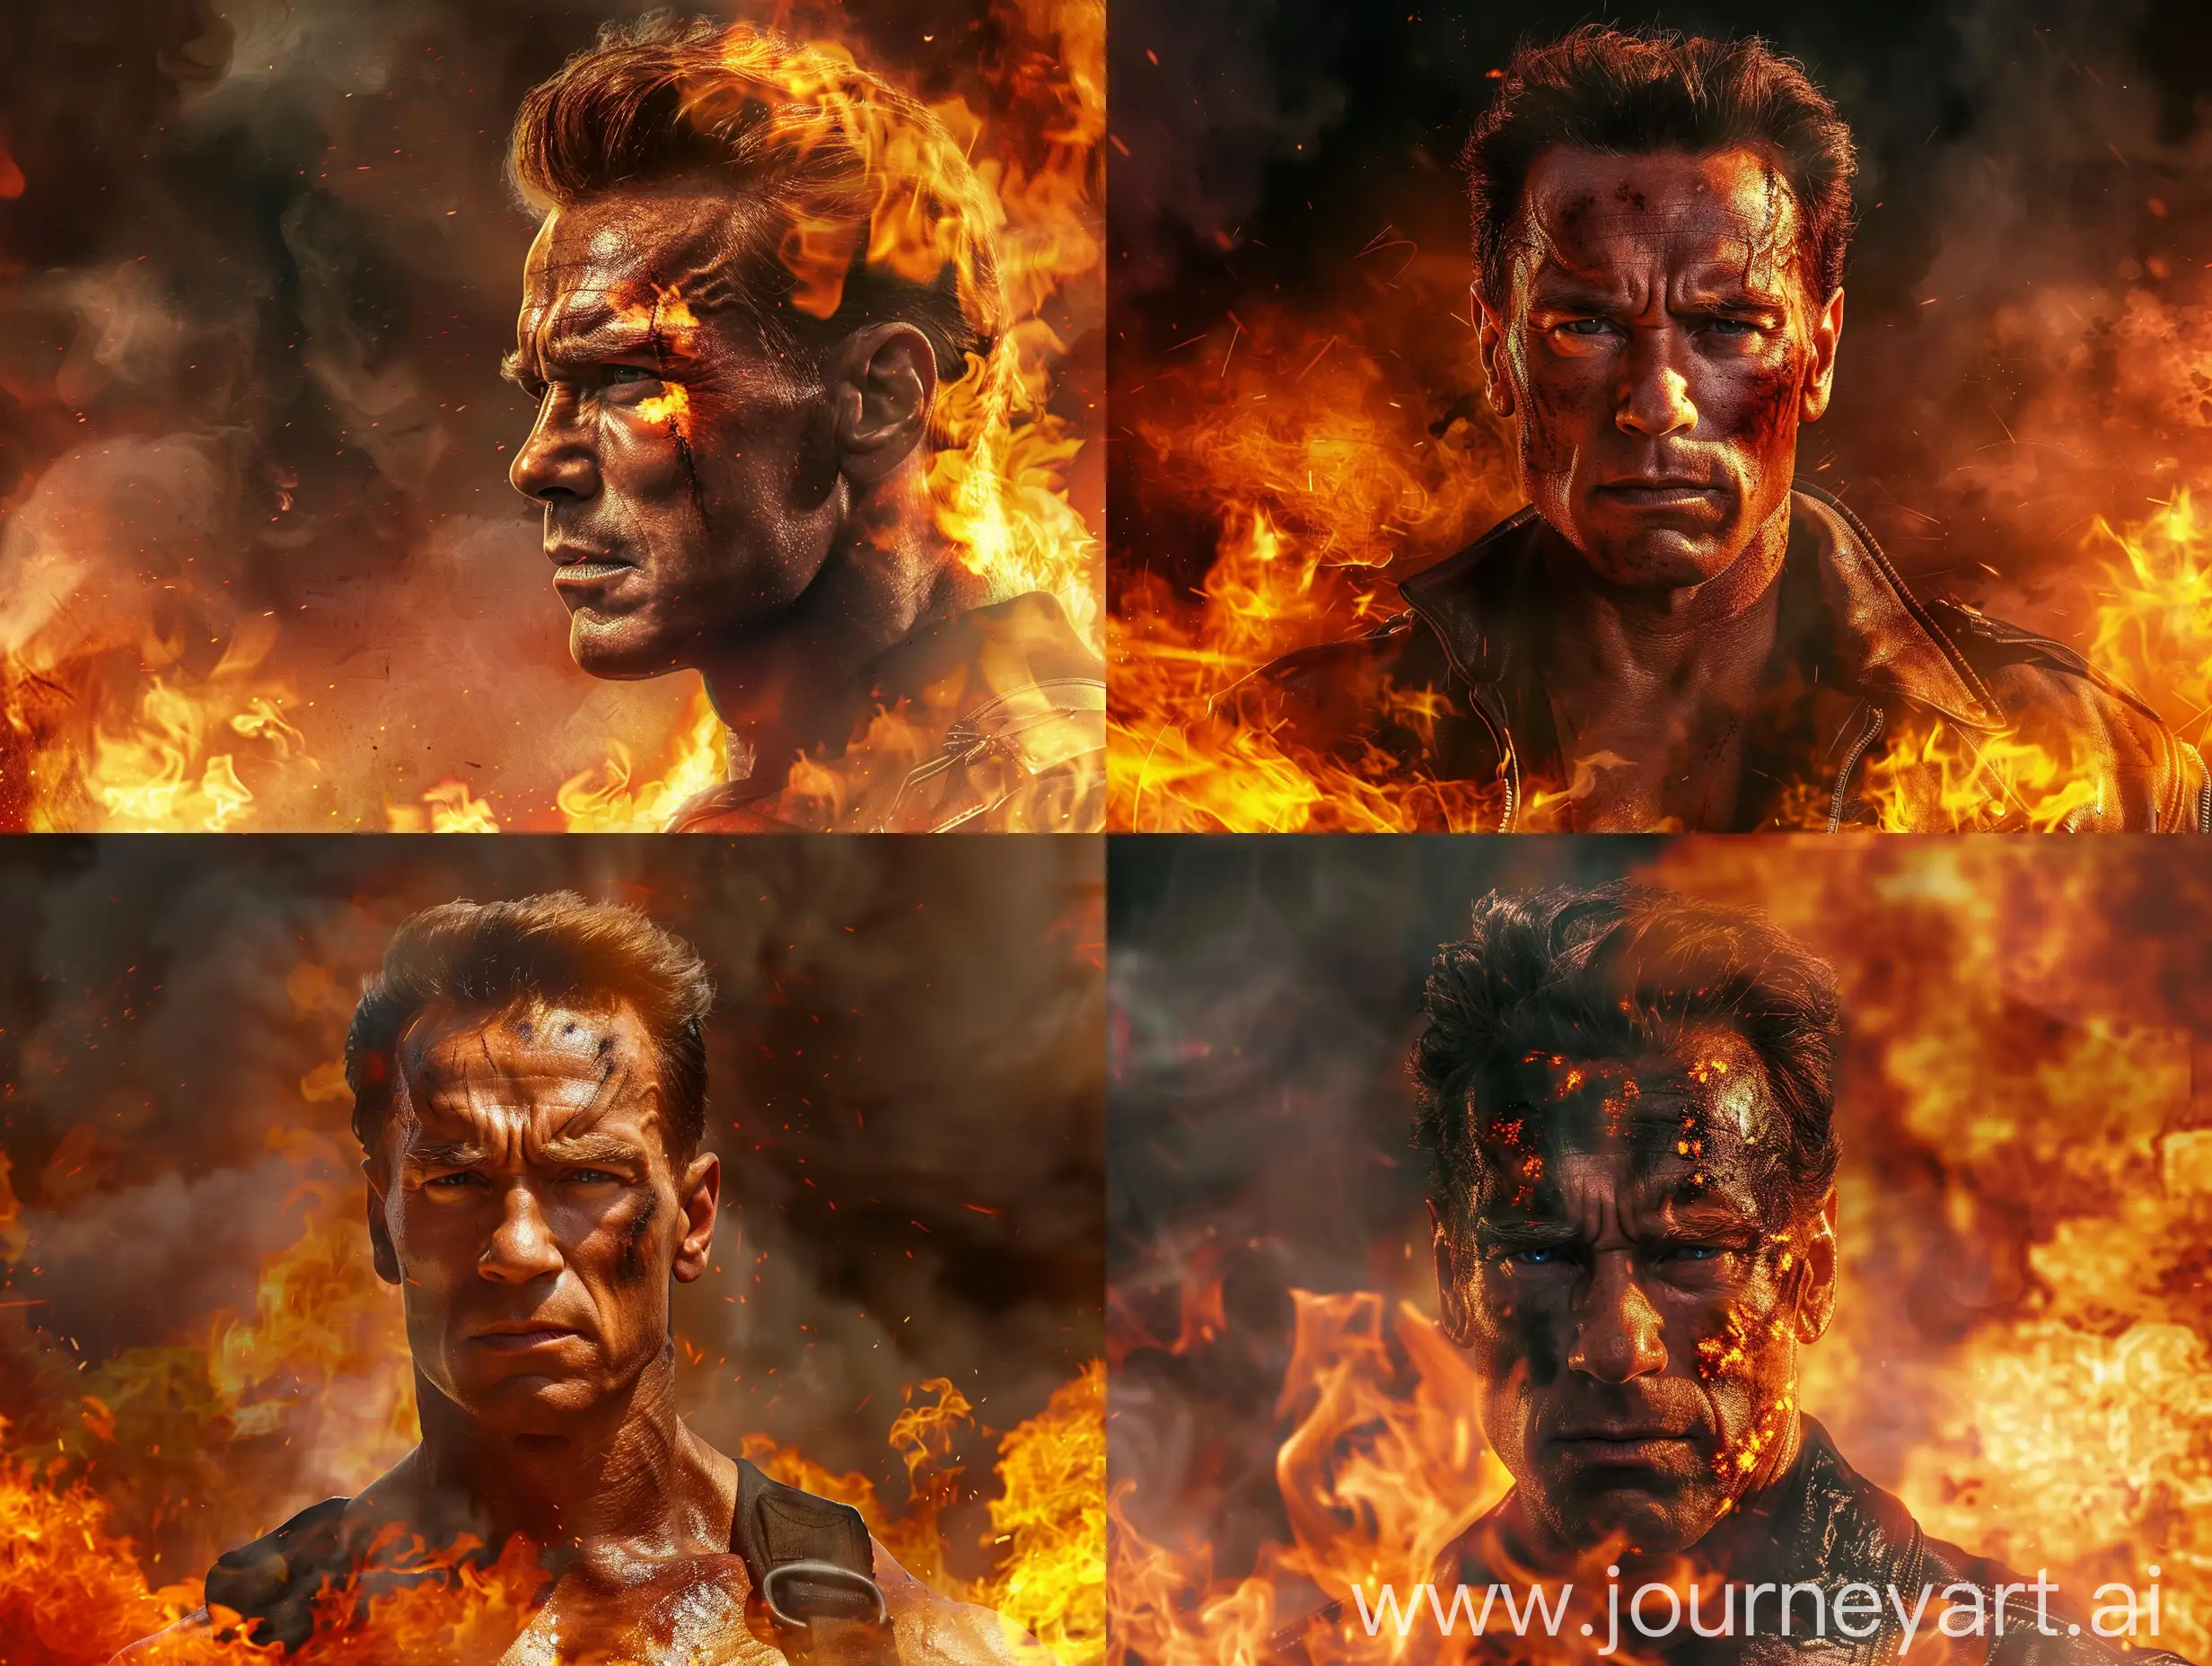 Arnold-Schwarzenegger-with-Fiery-Background-in-Realistic-Style